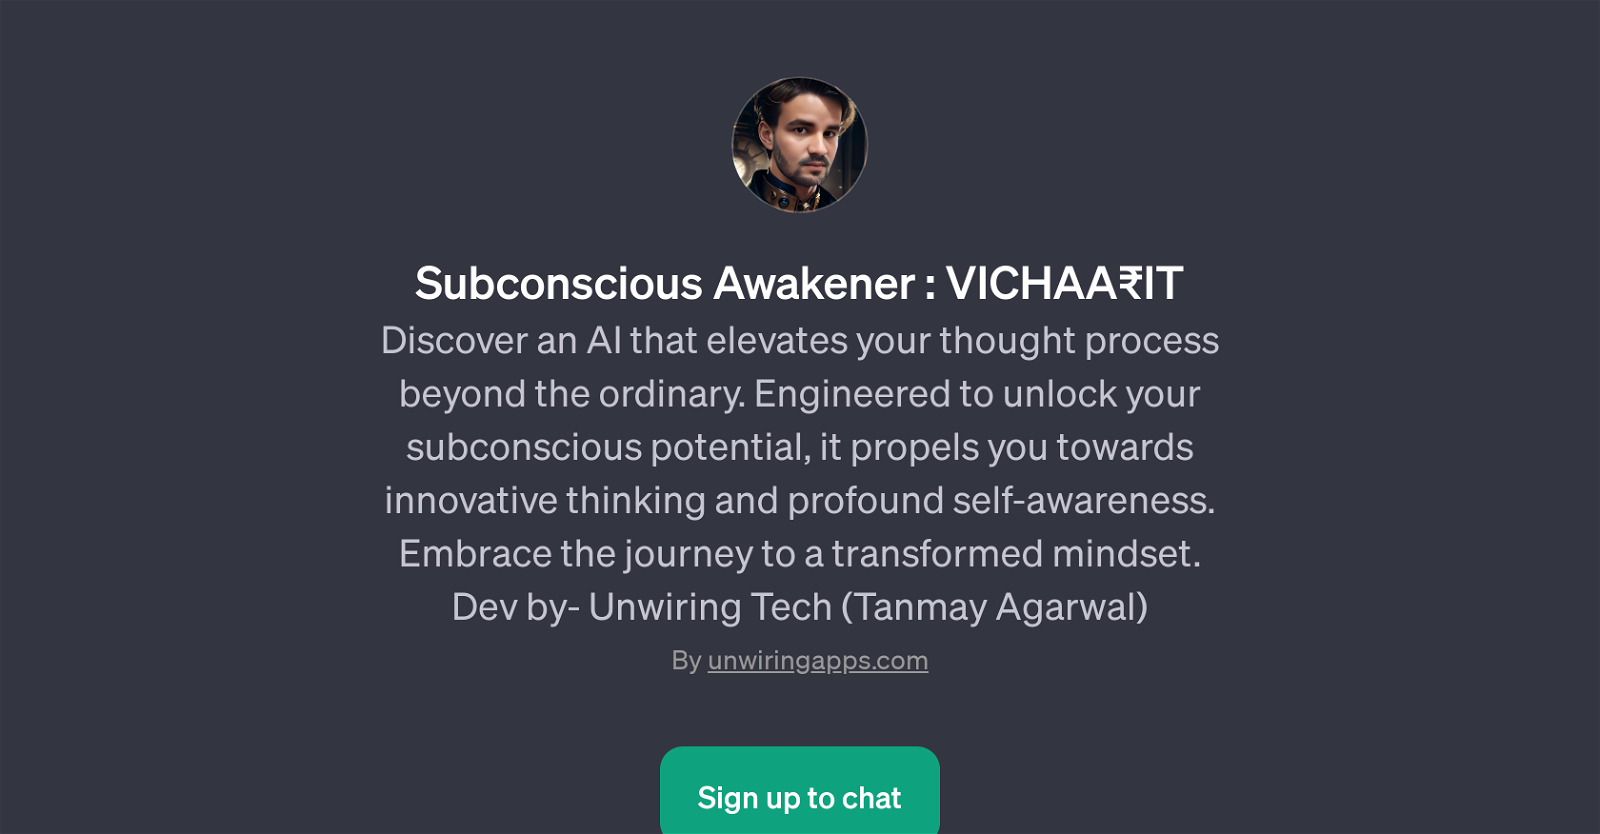 Subconscious Awakener : VICHAAIT website